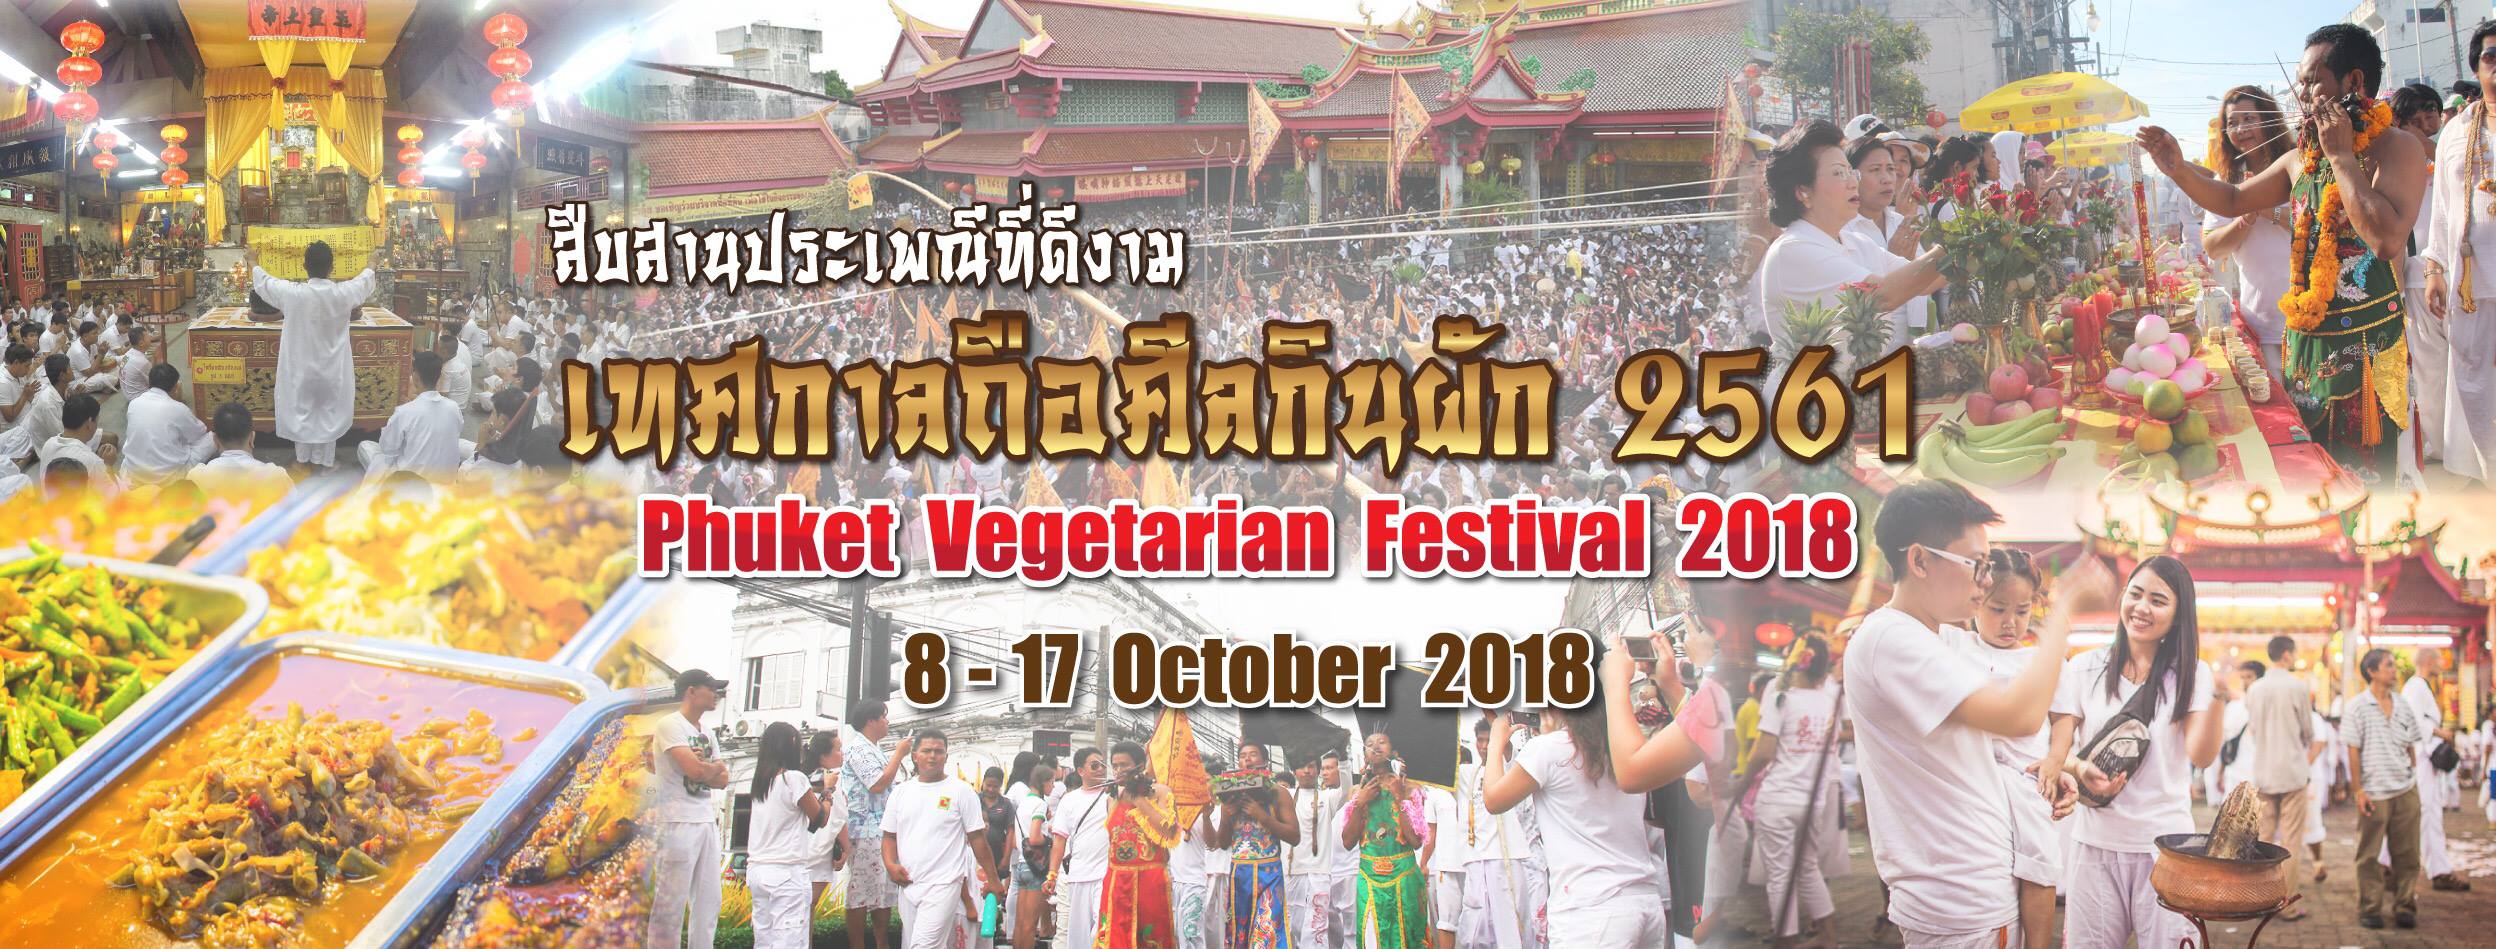 Festival Végétarien 2018 - Phuket Vegetarian Festival